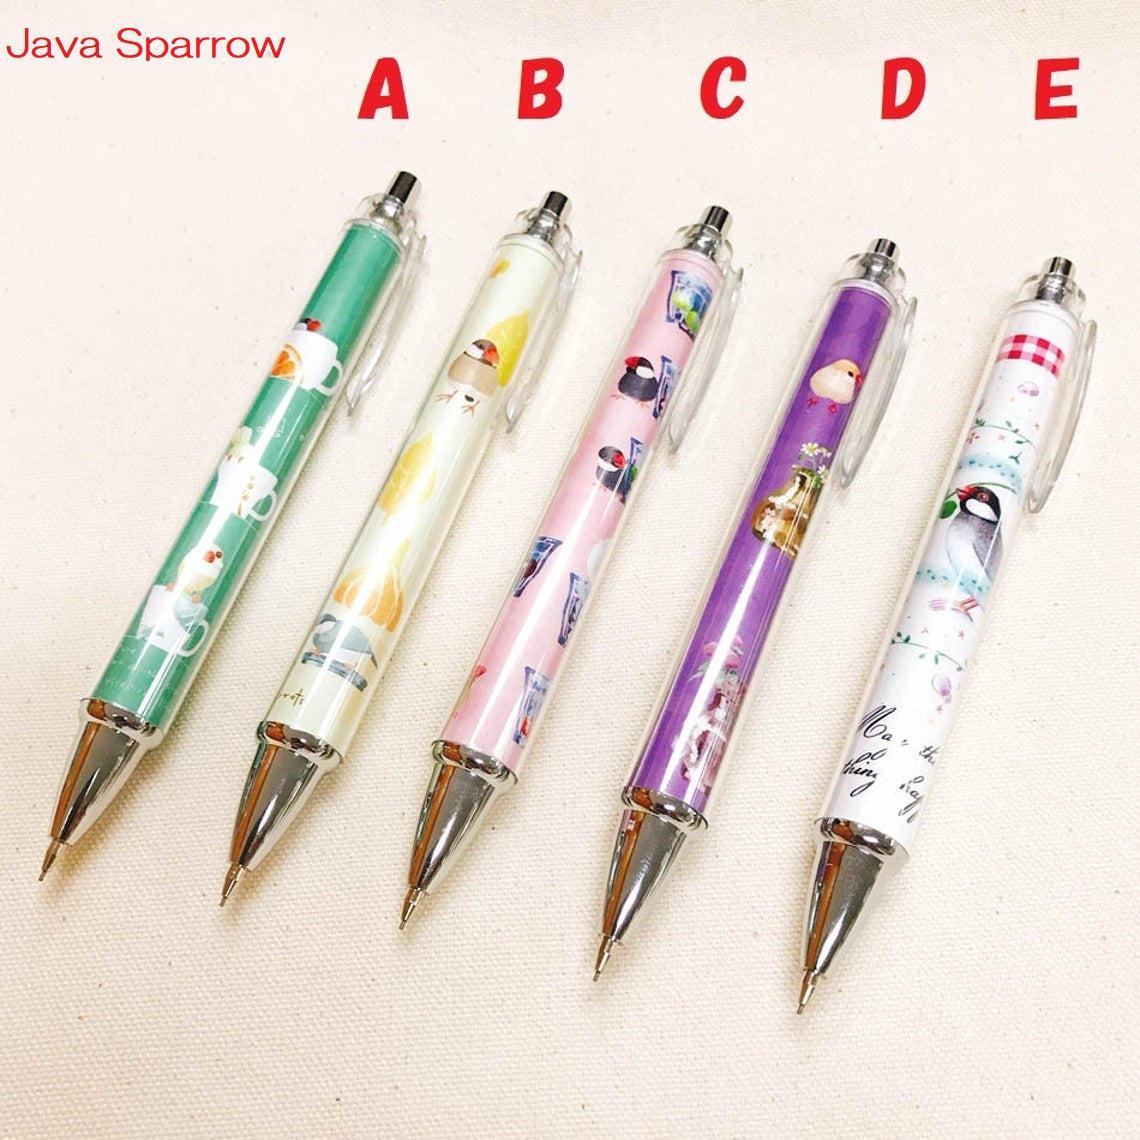 Java Sparrow Mechanical Pencil